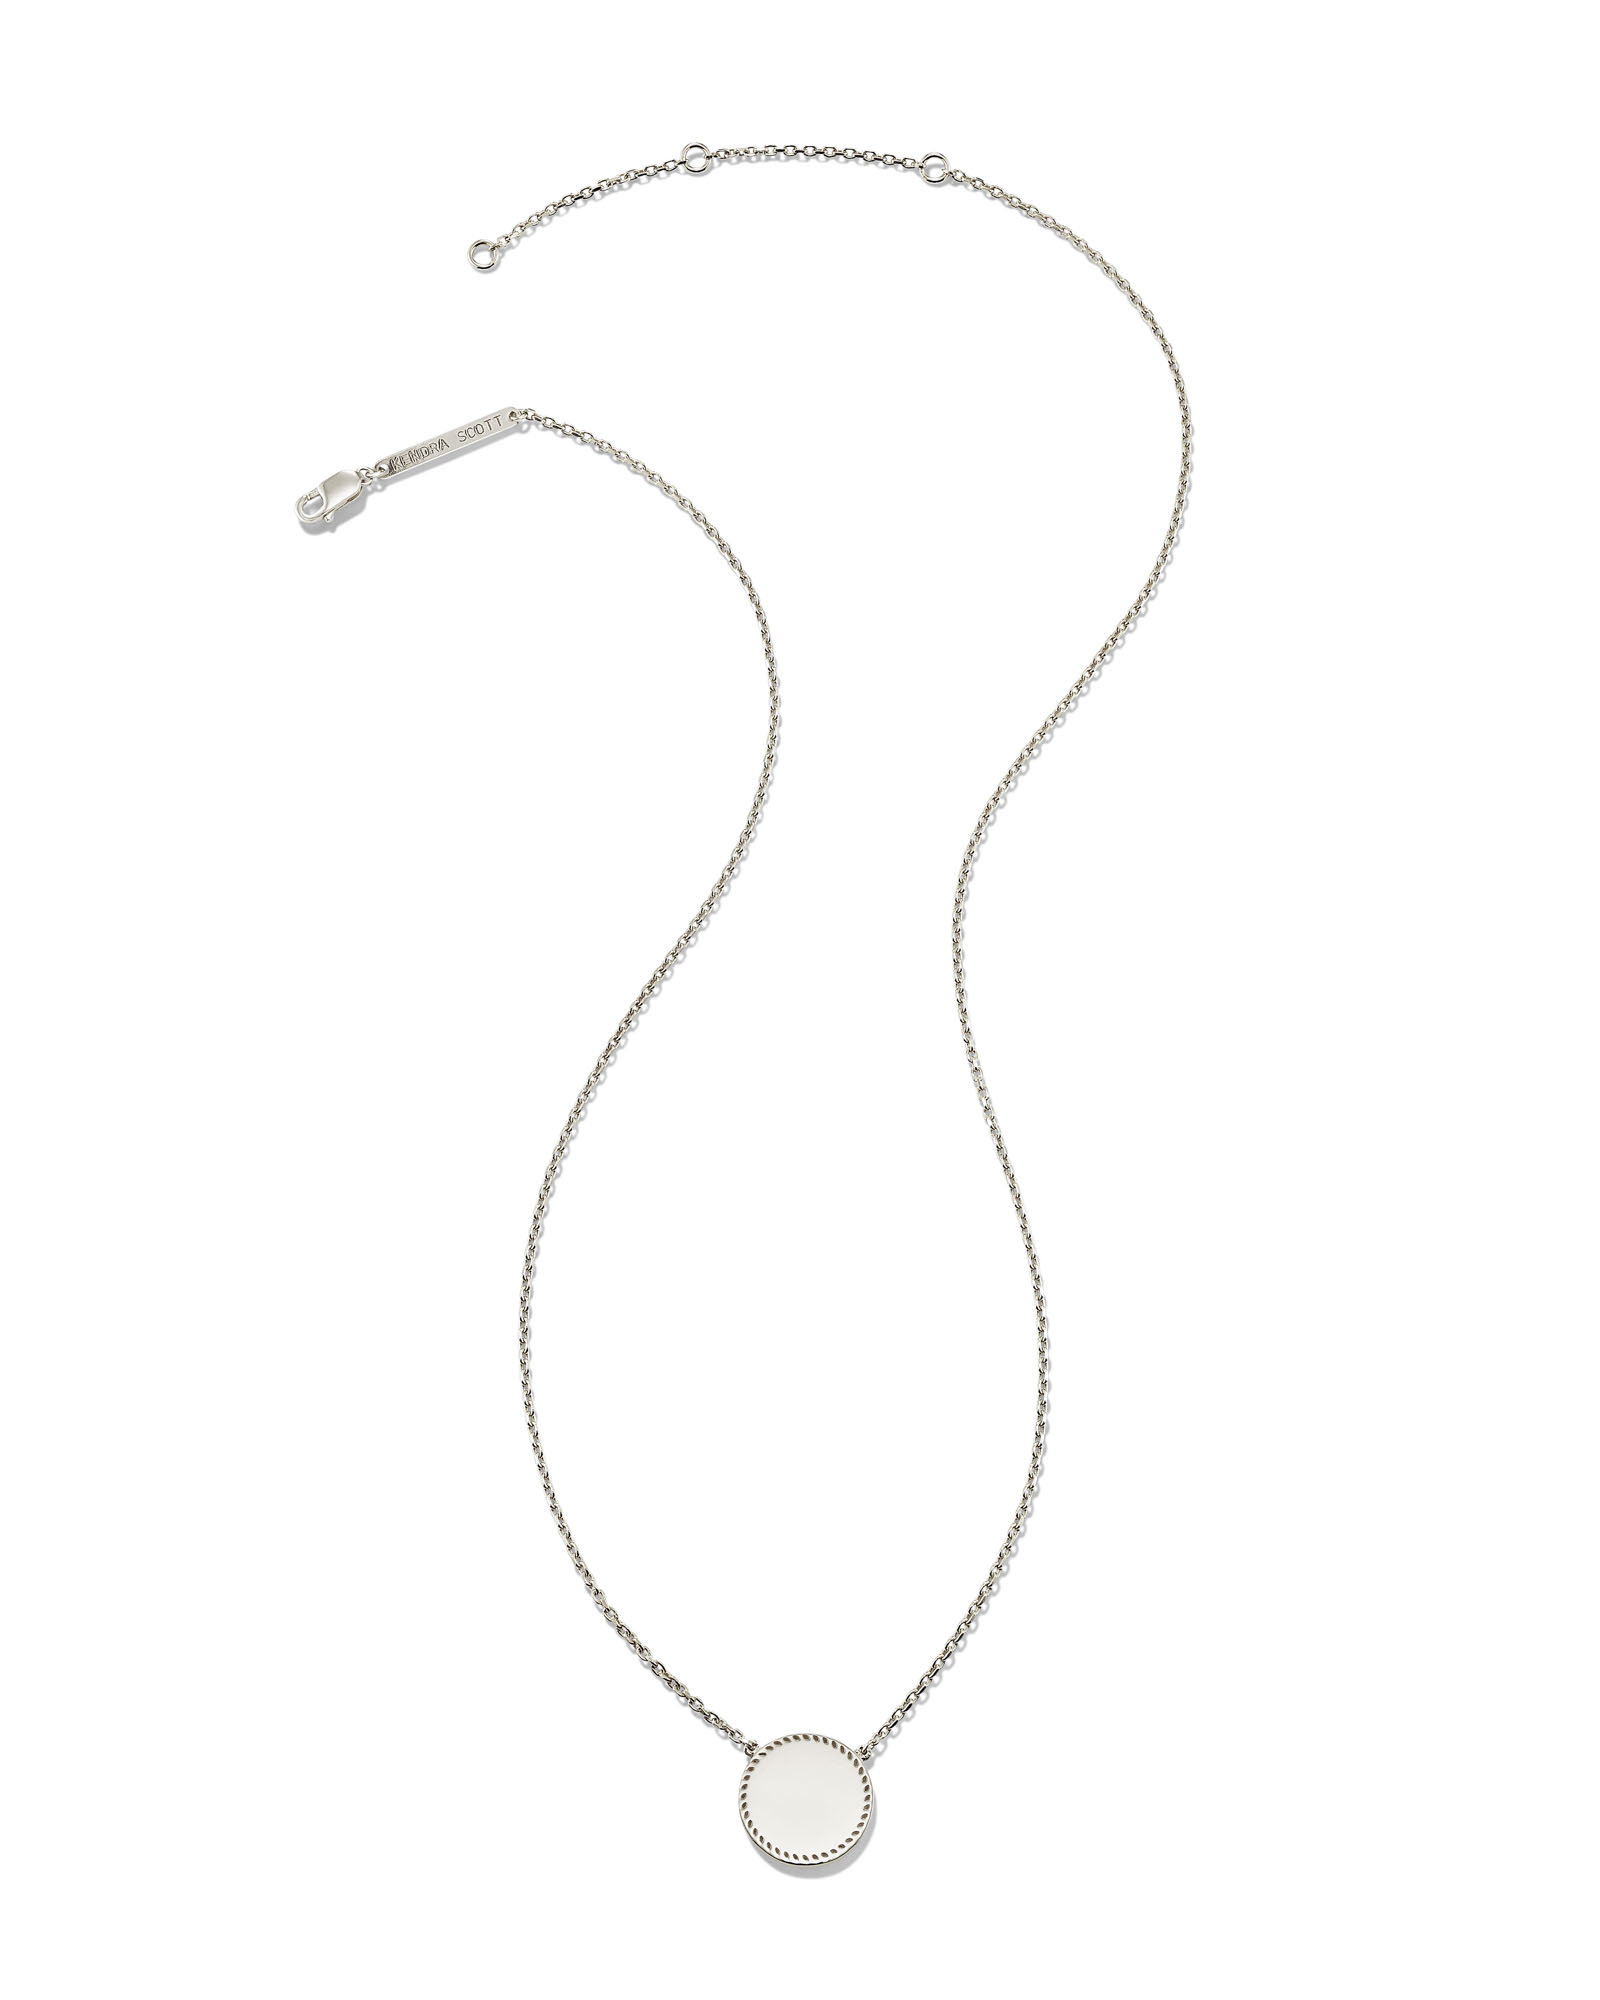 Aubree Pendant Necklace in Sterling Silver | Kendra Scott